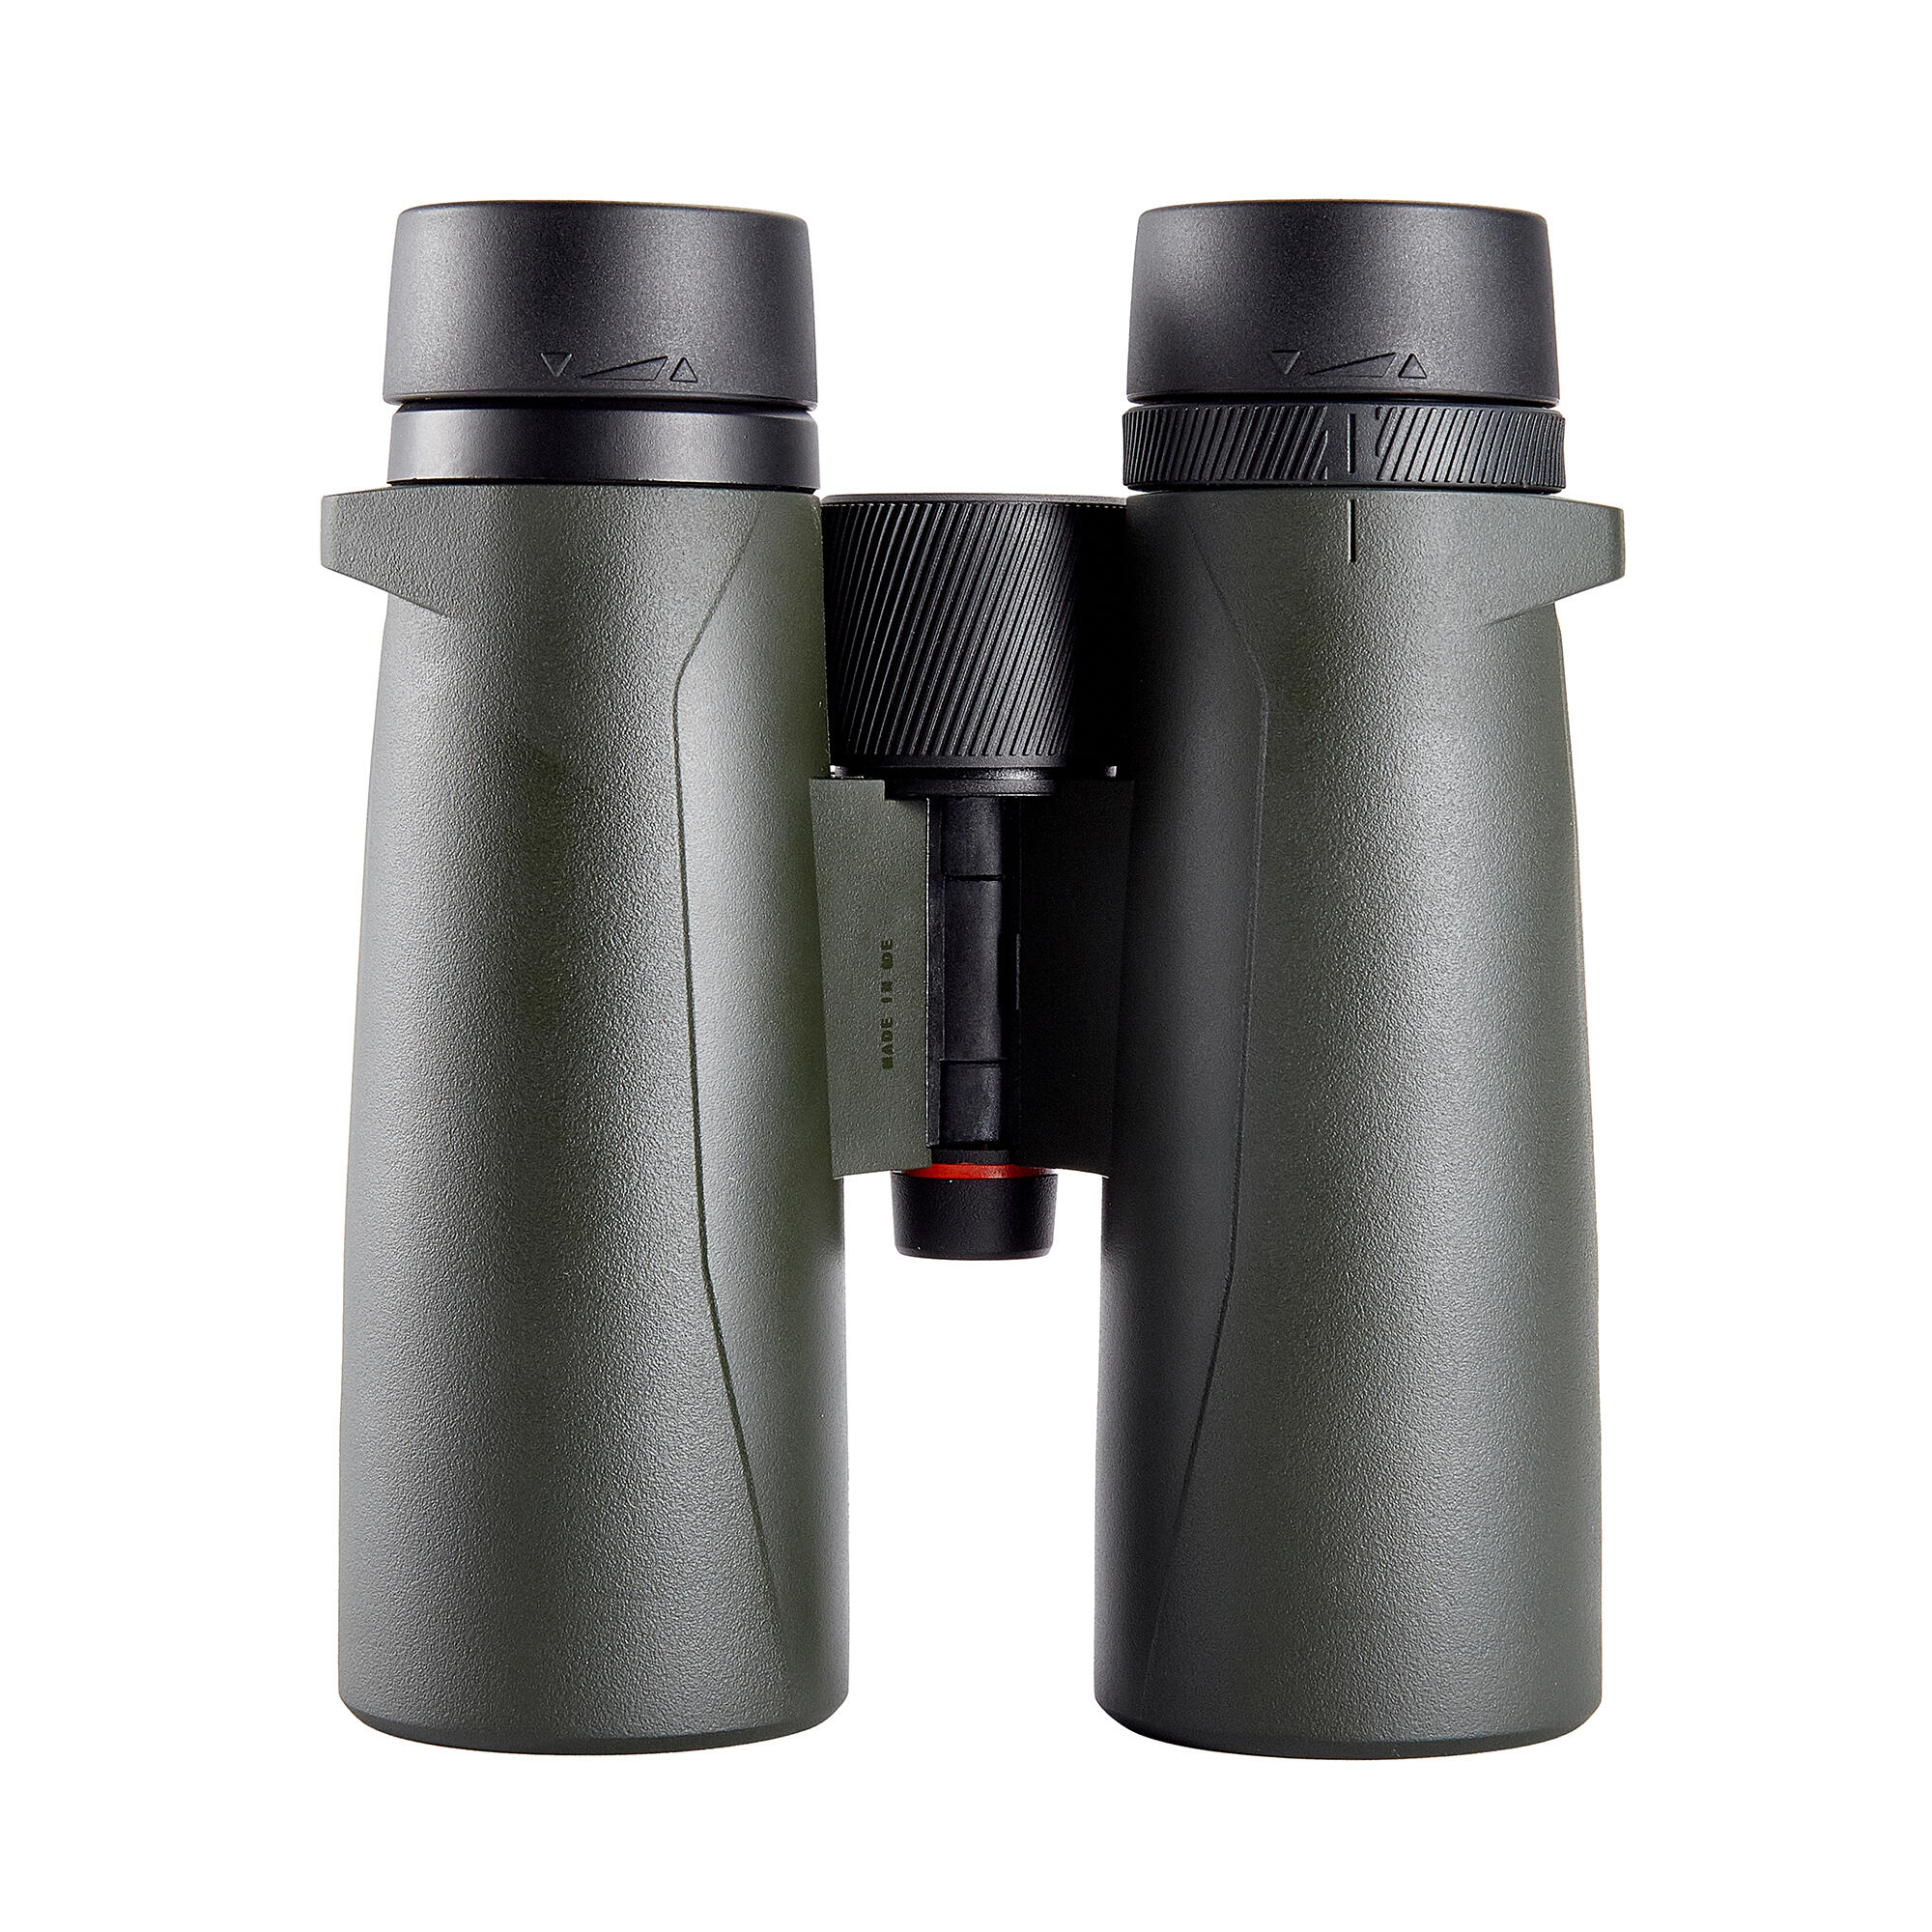 Waterproof hunting binoculars 500 8x42 - khaki 5/9